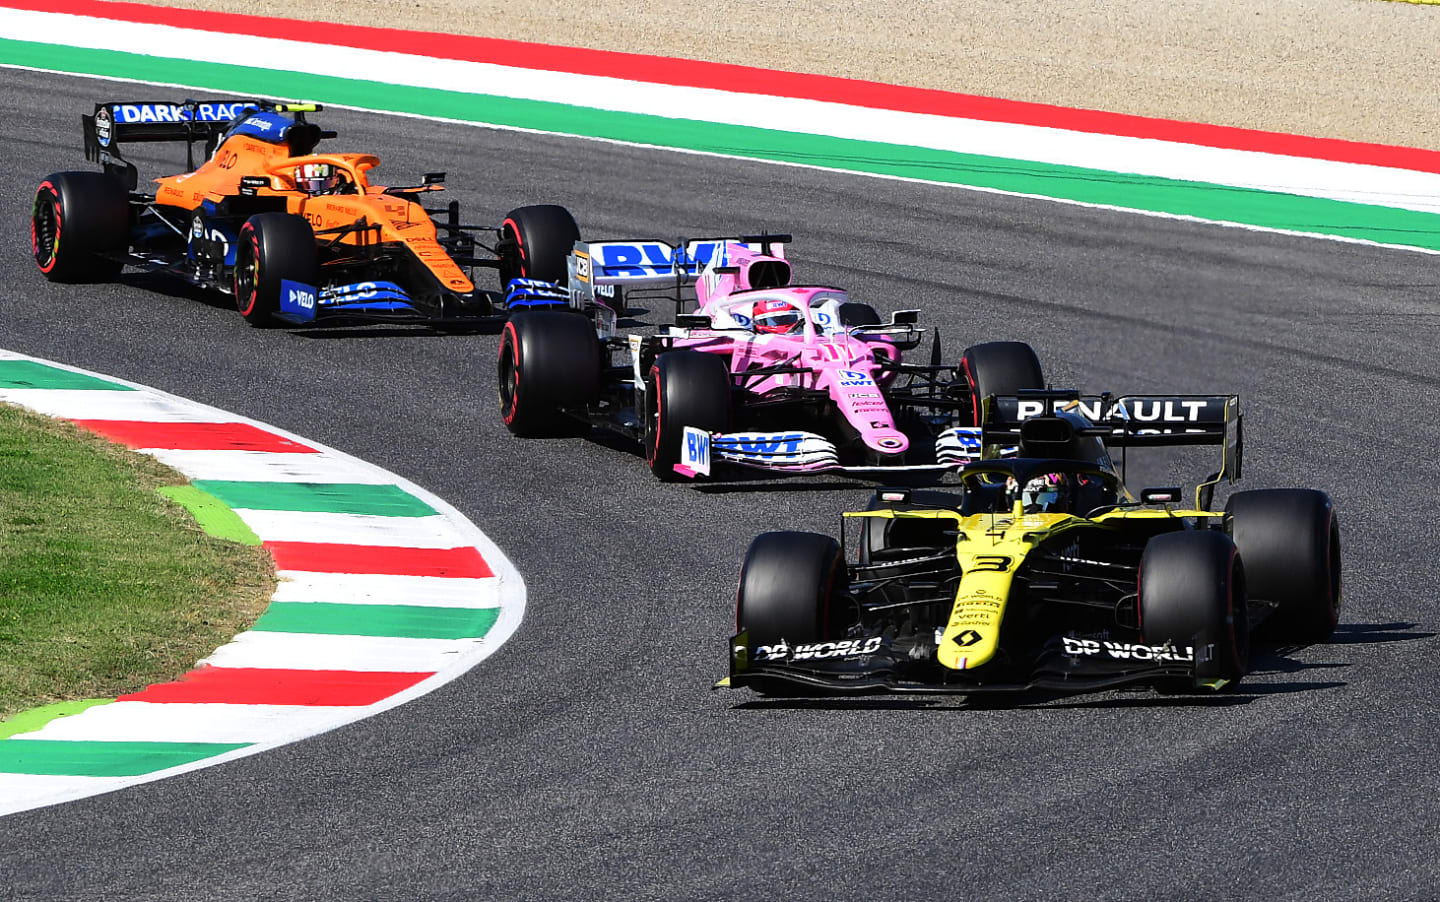 SCARPERIA, ITALY - SEPTEMBER 13: Daniel Ricciardo of Australia driving the (3) Renault Sport